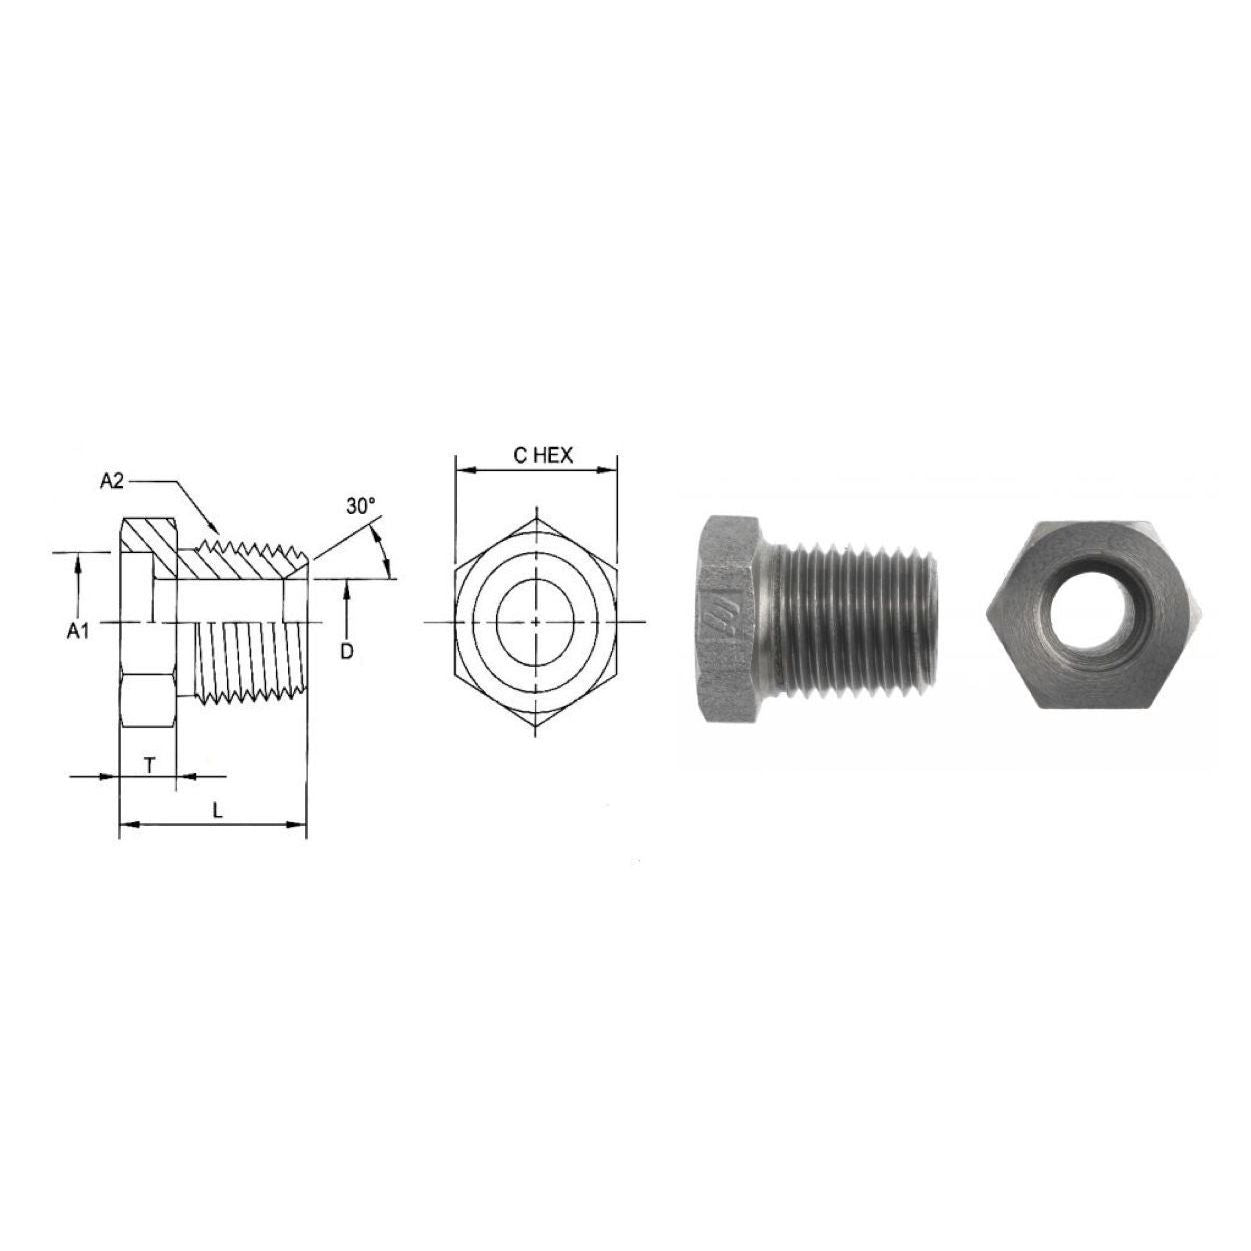 0404-20-20 : OneHydraulics 1.25 (1-1/4) Bore x 1.25 (1-1/4) Male NPT Straight Plug, Steel